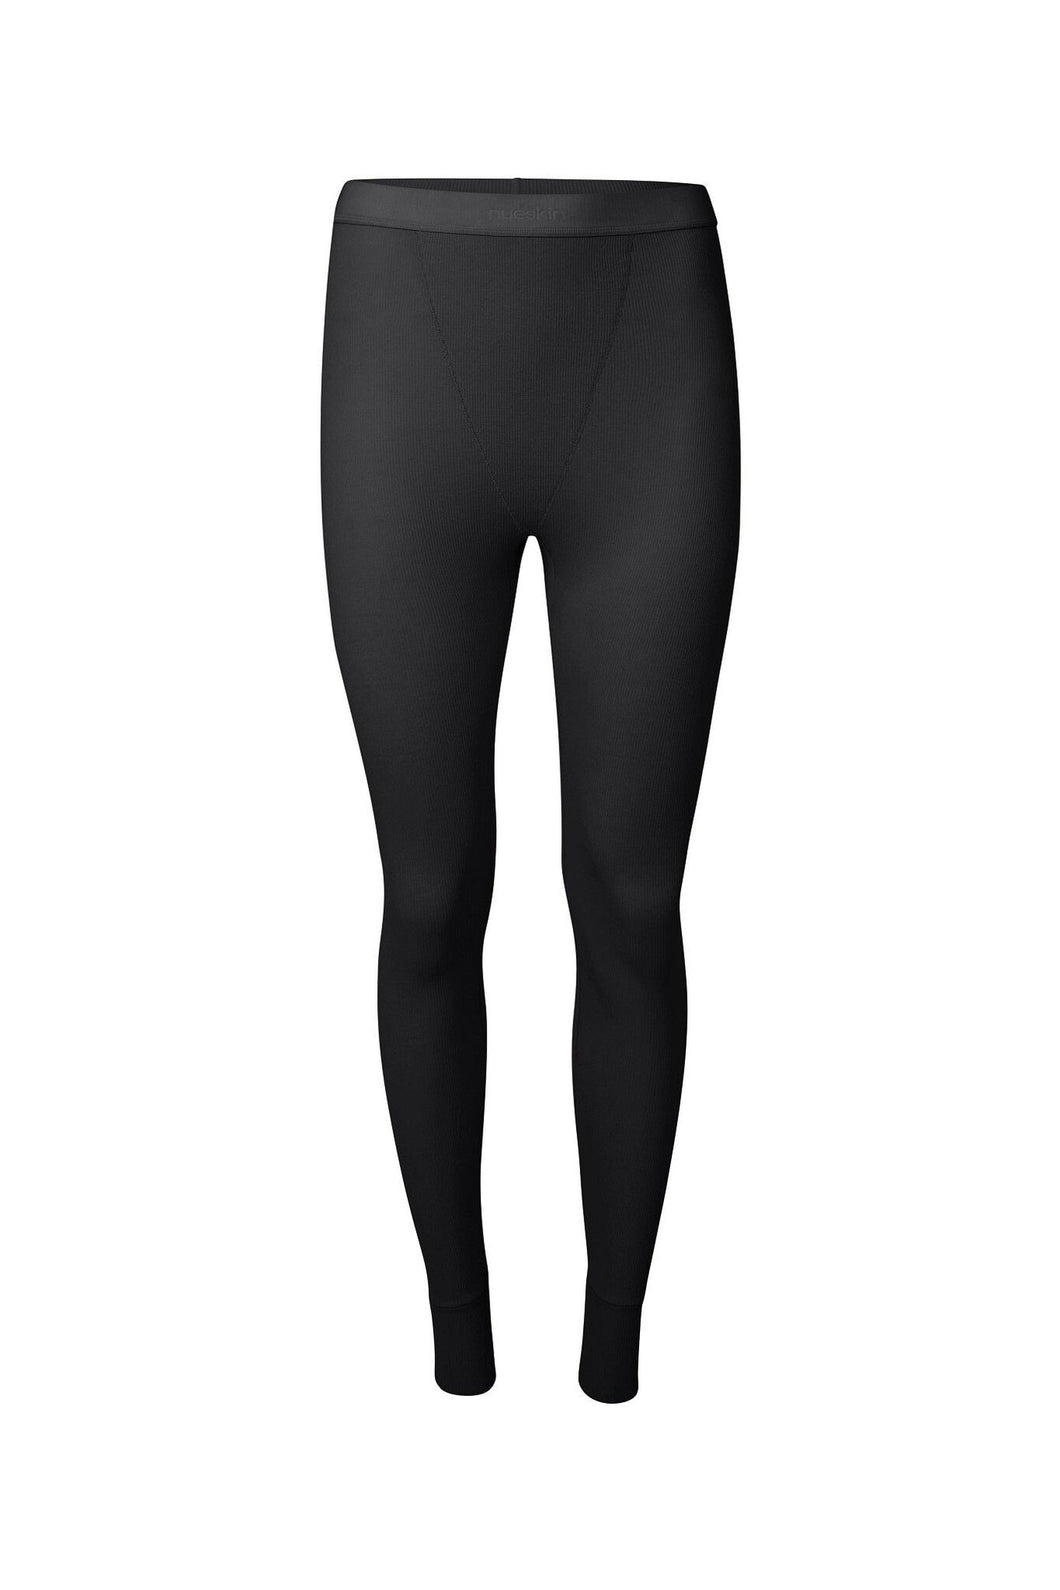 nueskin Laurie Rib Cotton Legging in color Jet Black and shape legging